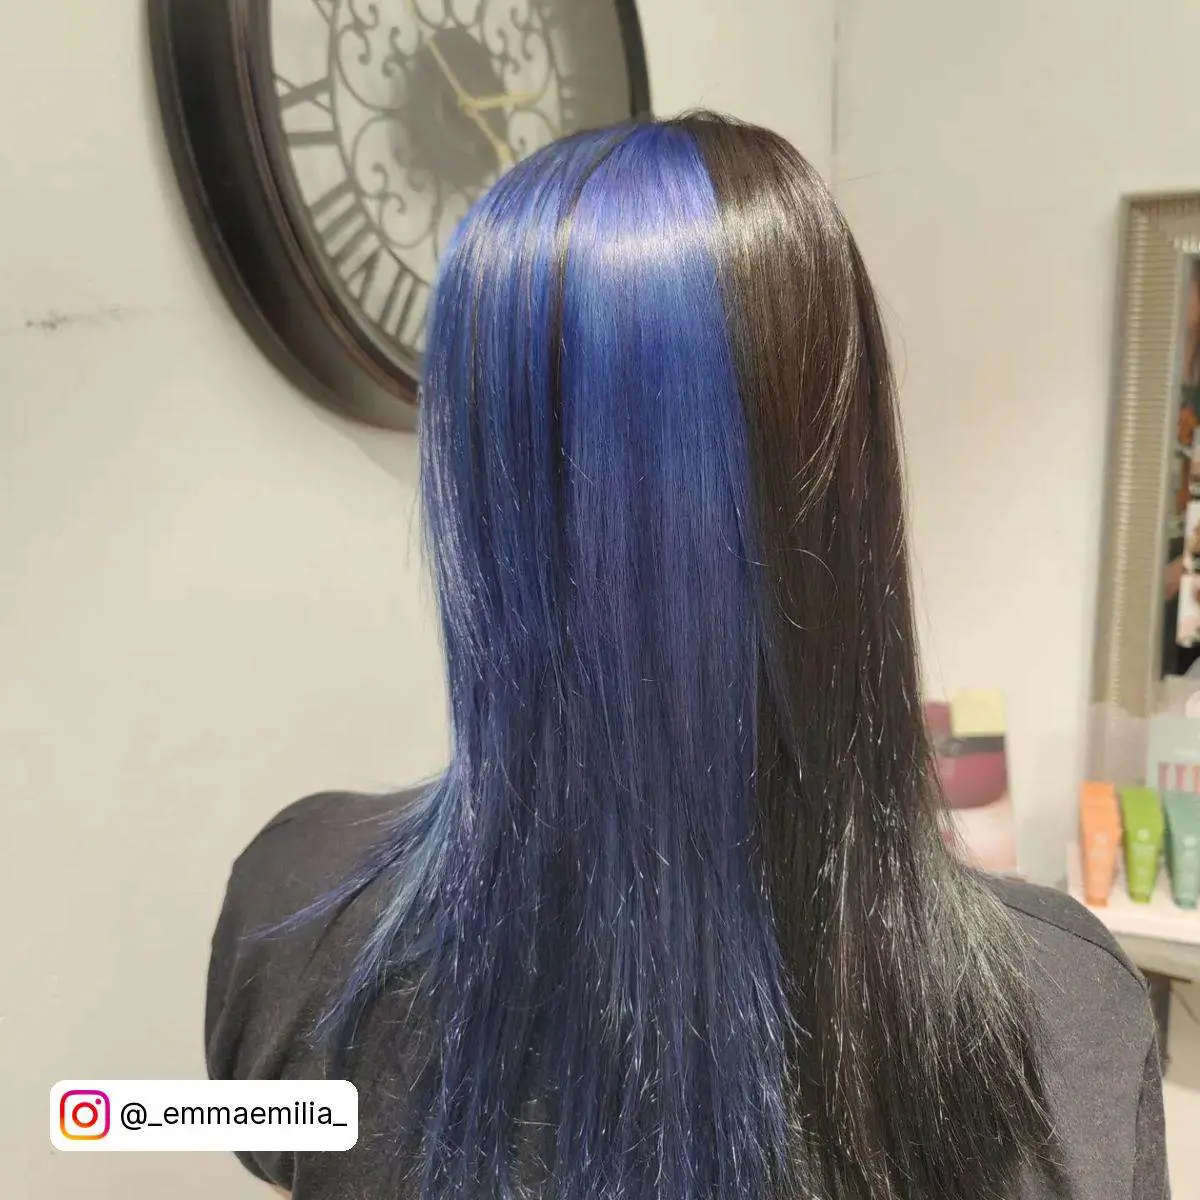 Half Blue Half Black Hair